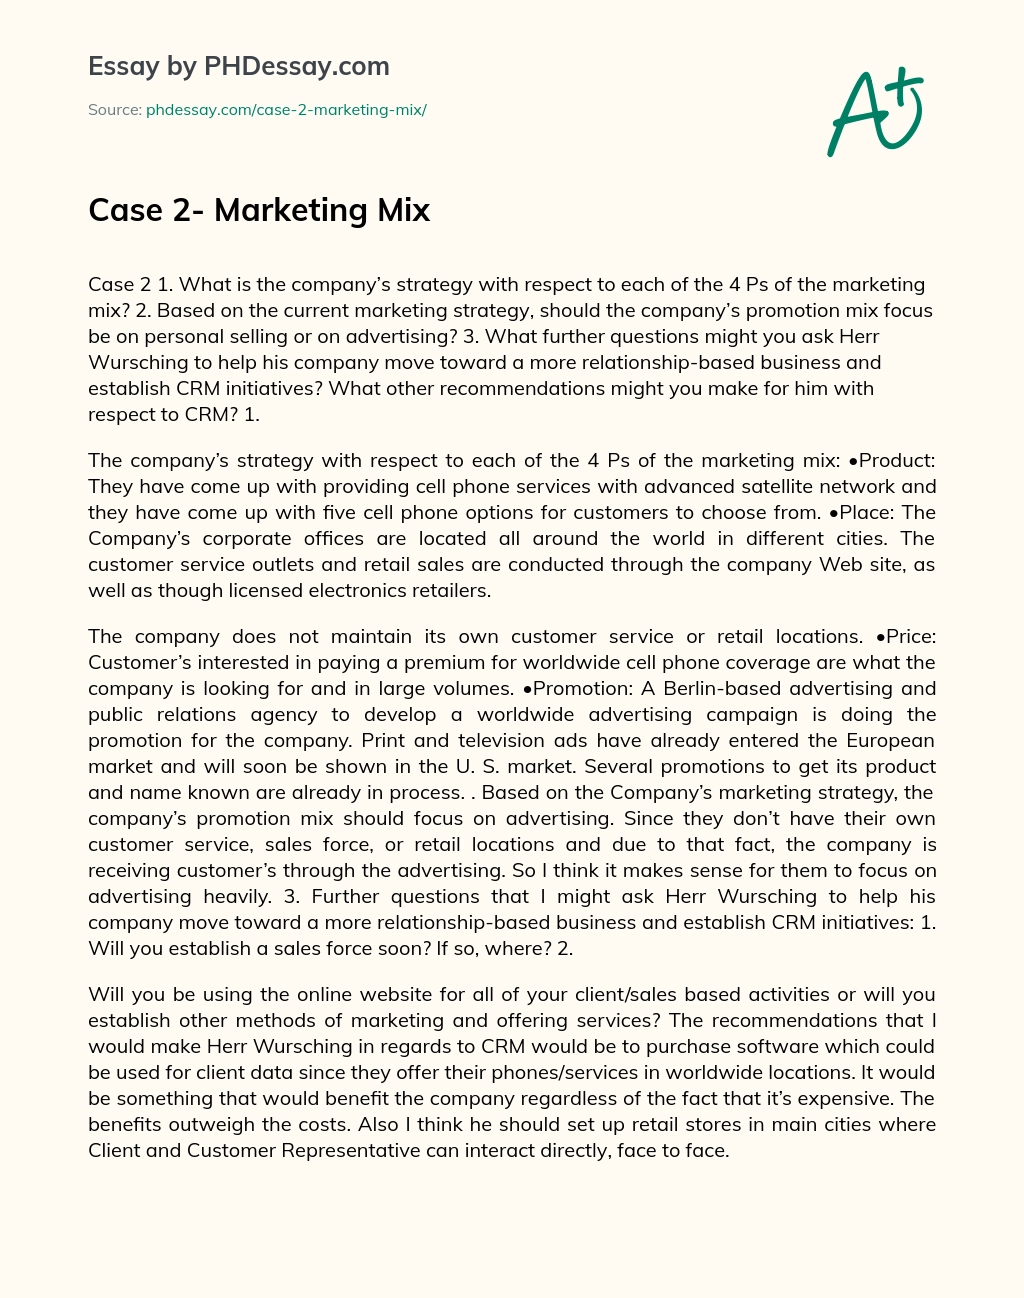 Case 2- Marketing Mix essay